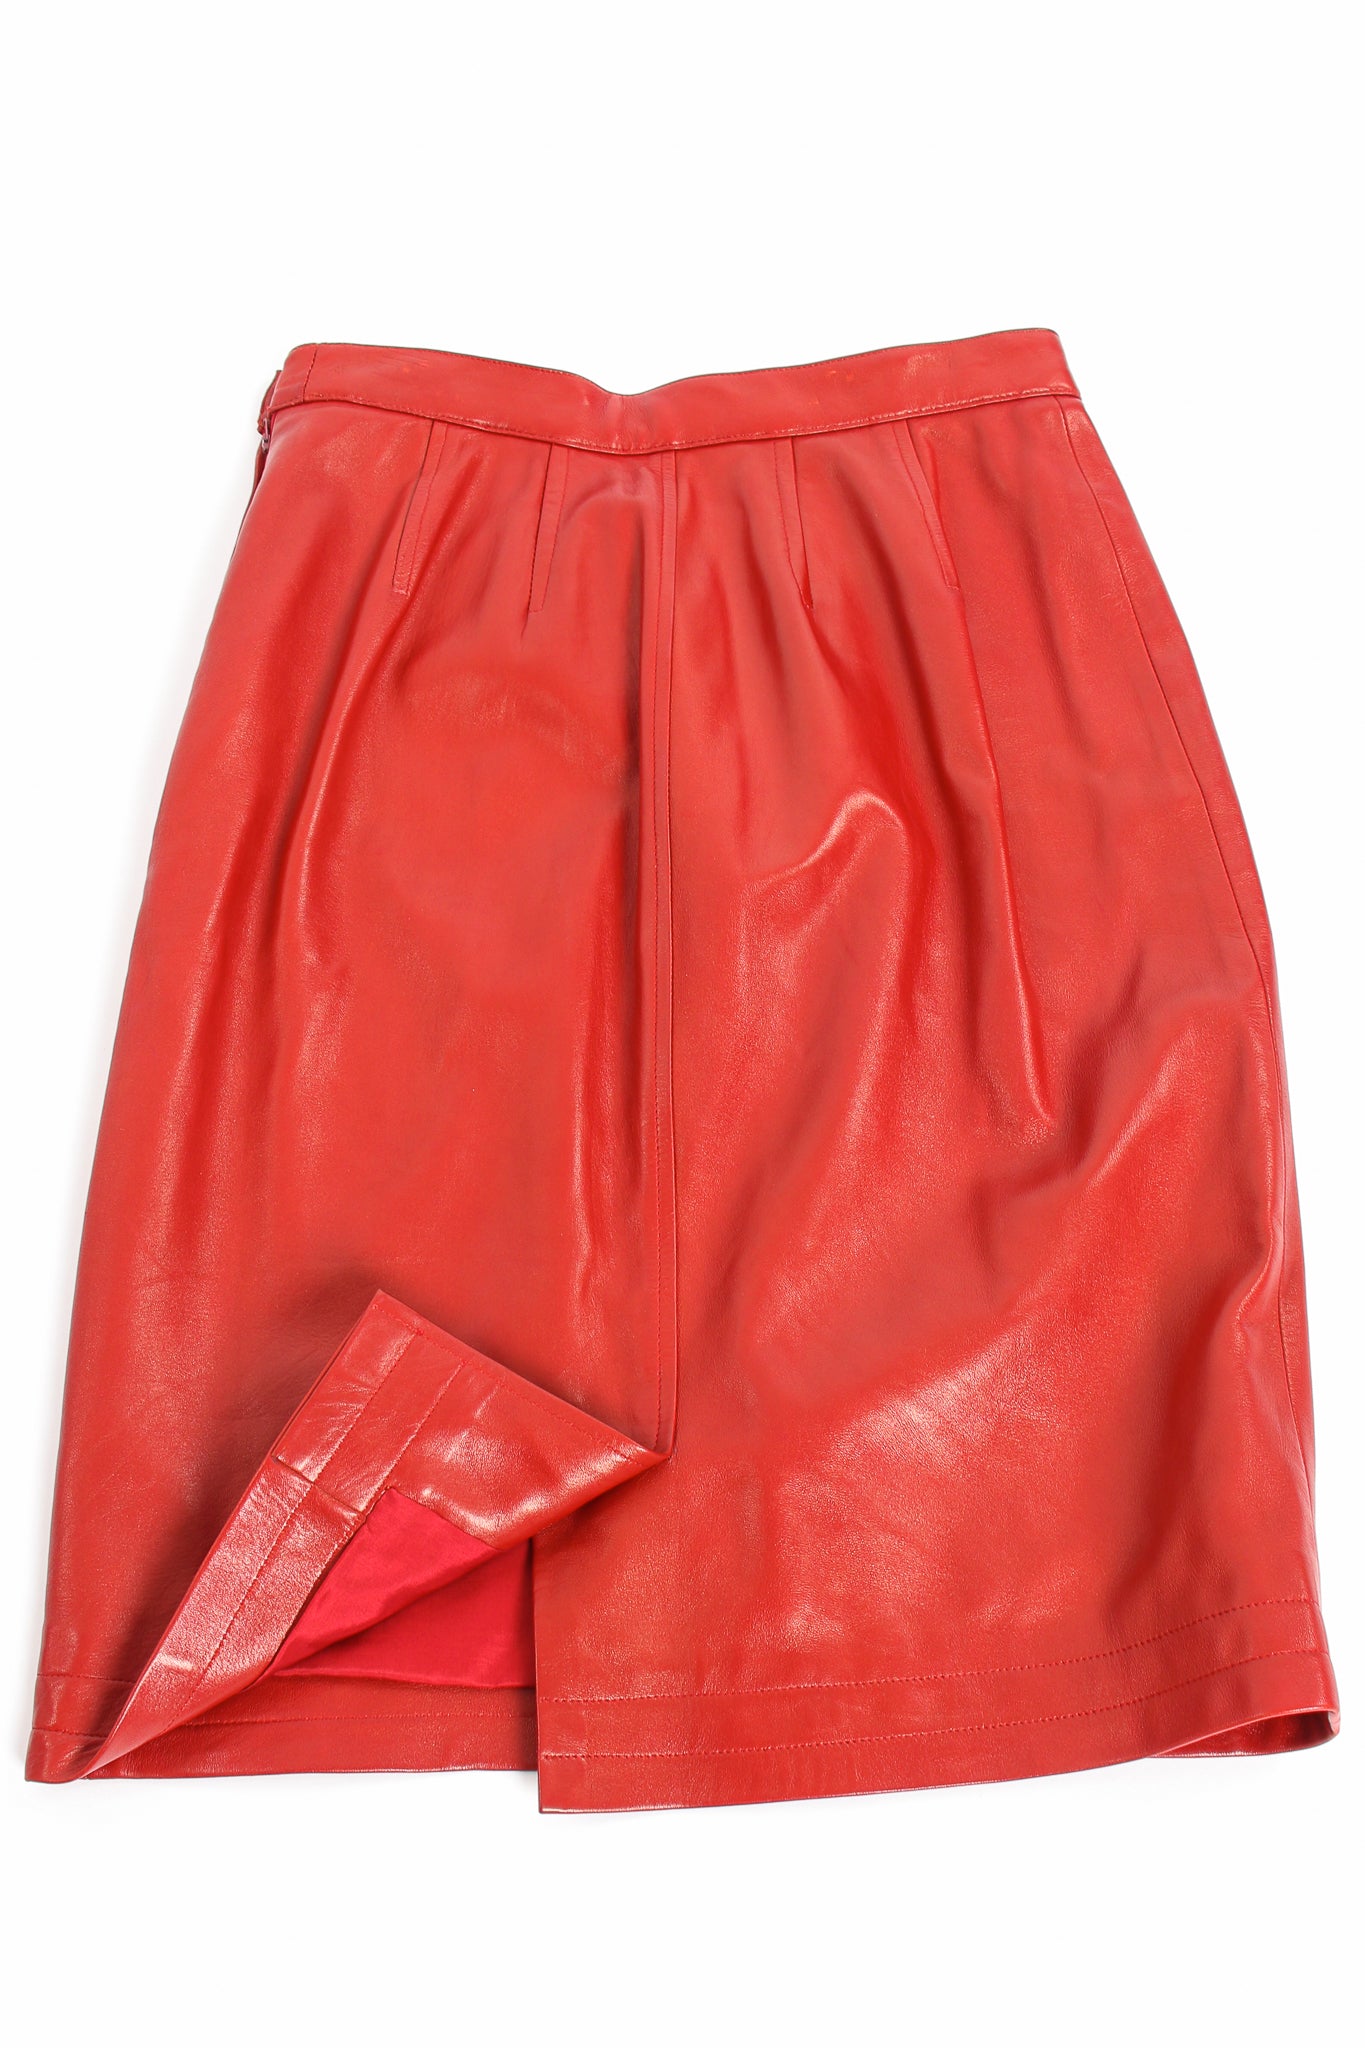 Vintage YSL Yves Saint Laurent 1988 Red Leather Skirt Suit skirt vent at Recess LA